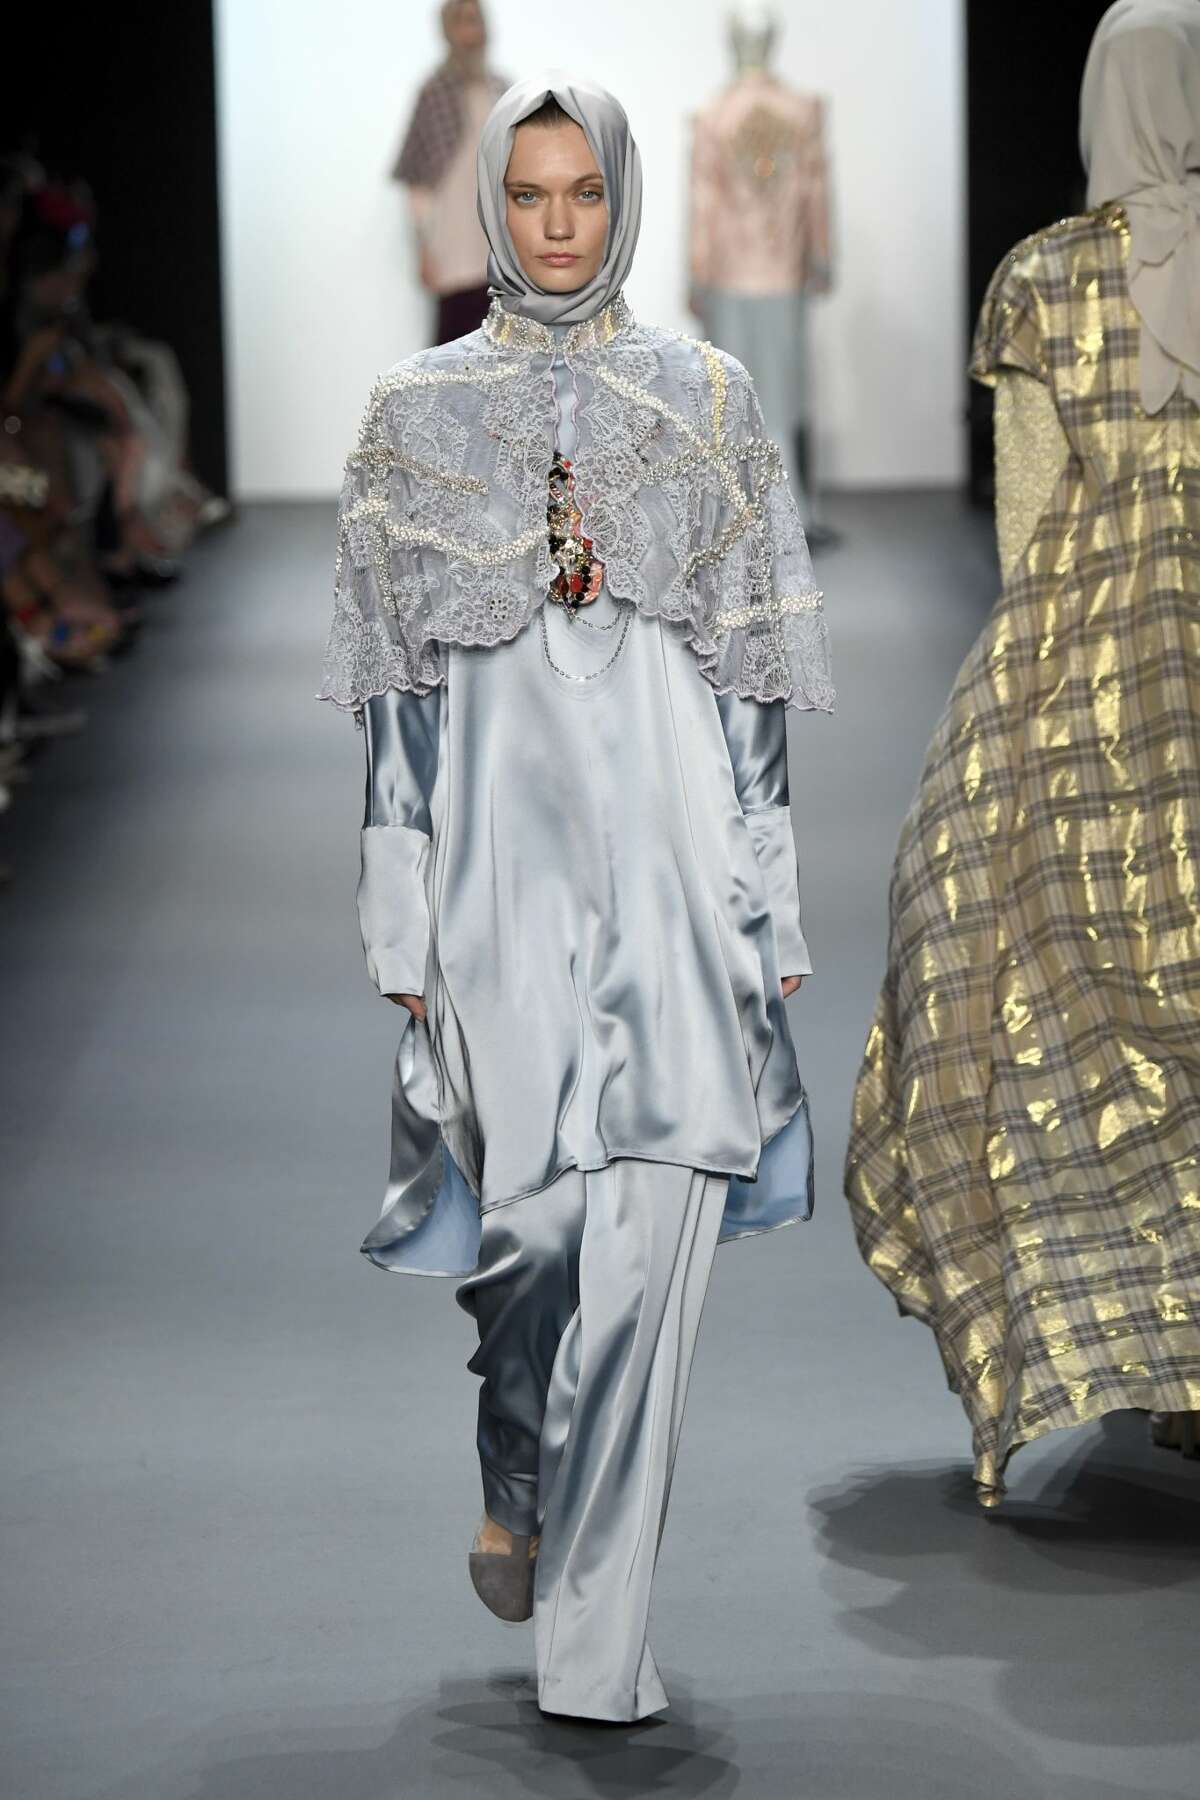 Muslim designer creates amazing hijab fashion for New York Fashion Week